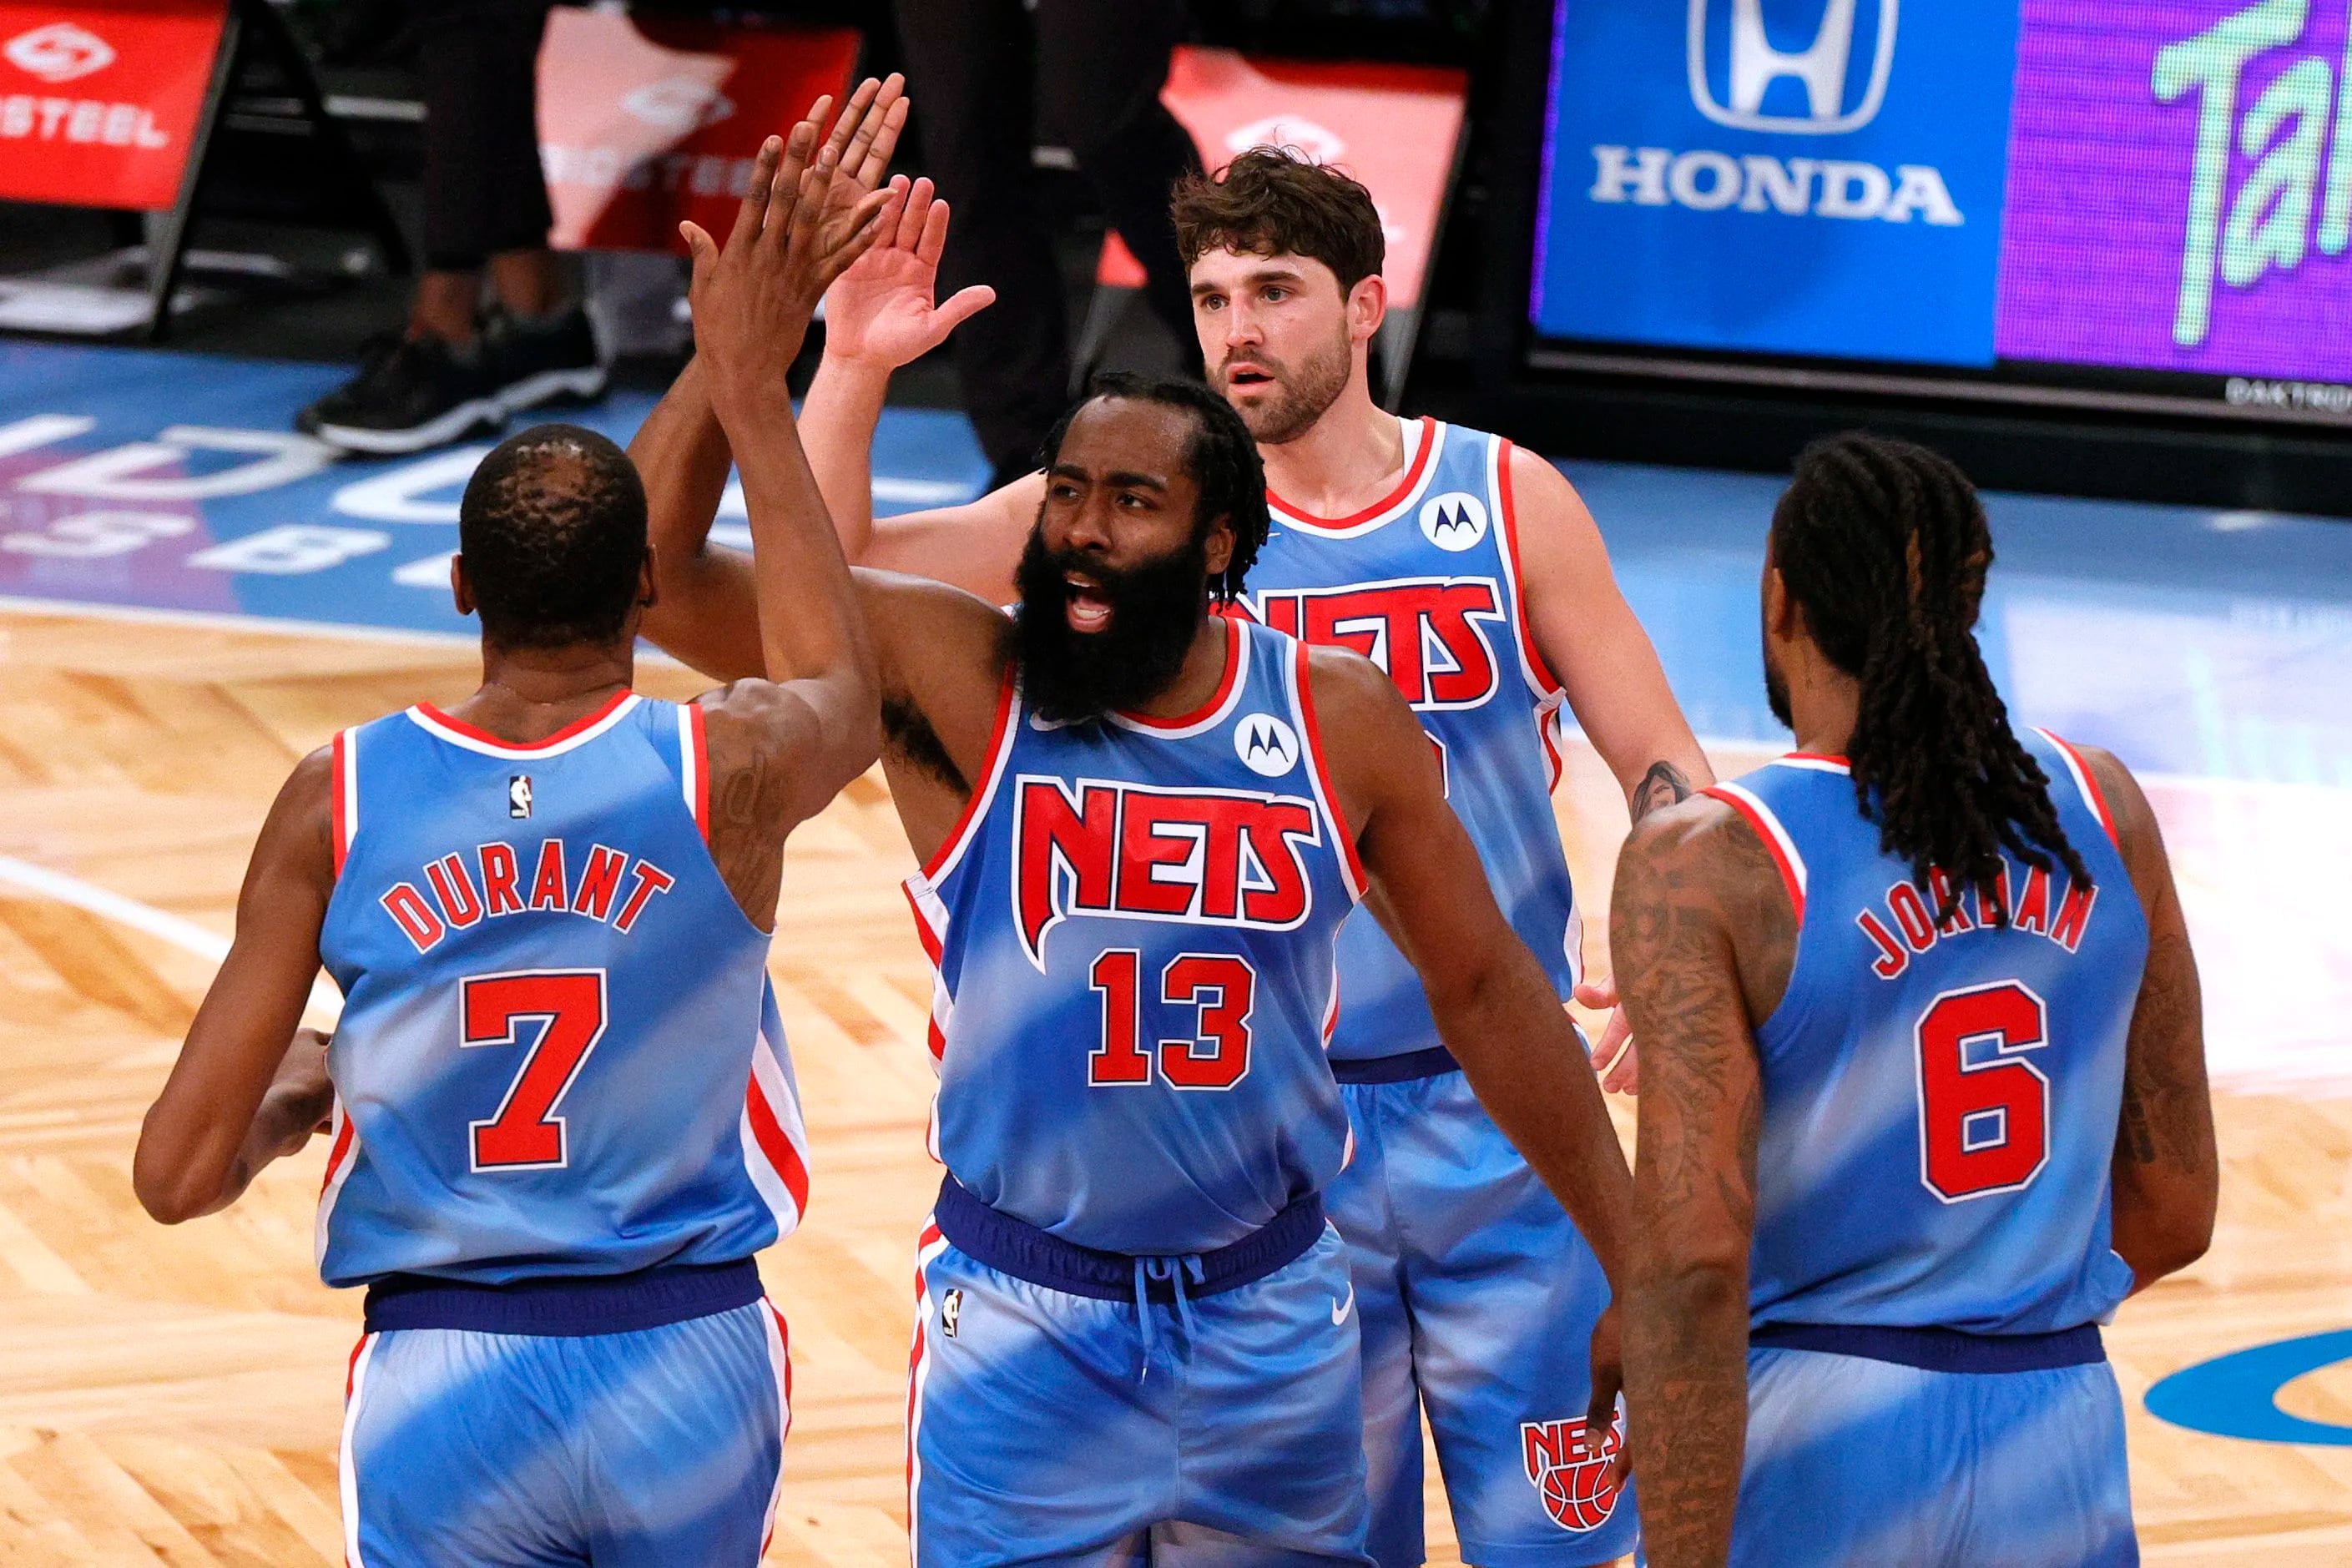 2022-23 NBA Hoops Blue DeAndre Jordan Philadelphia 76ers #35